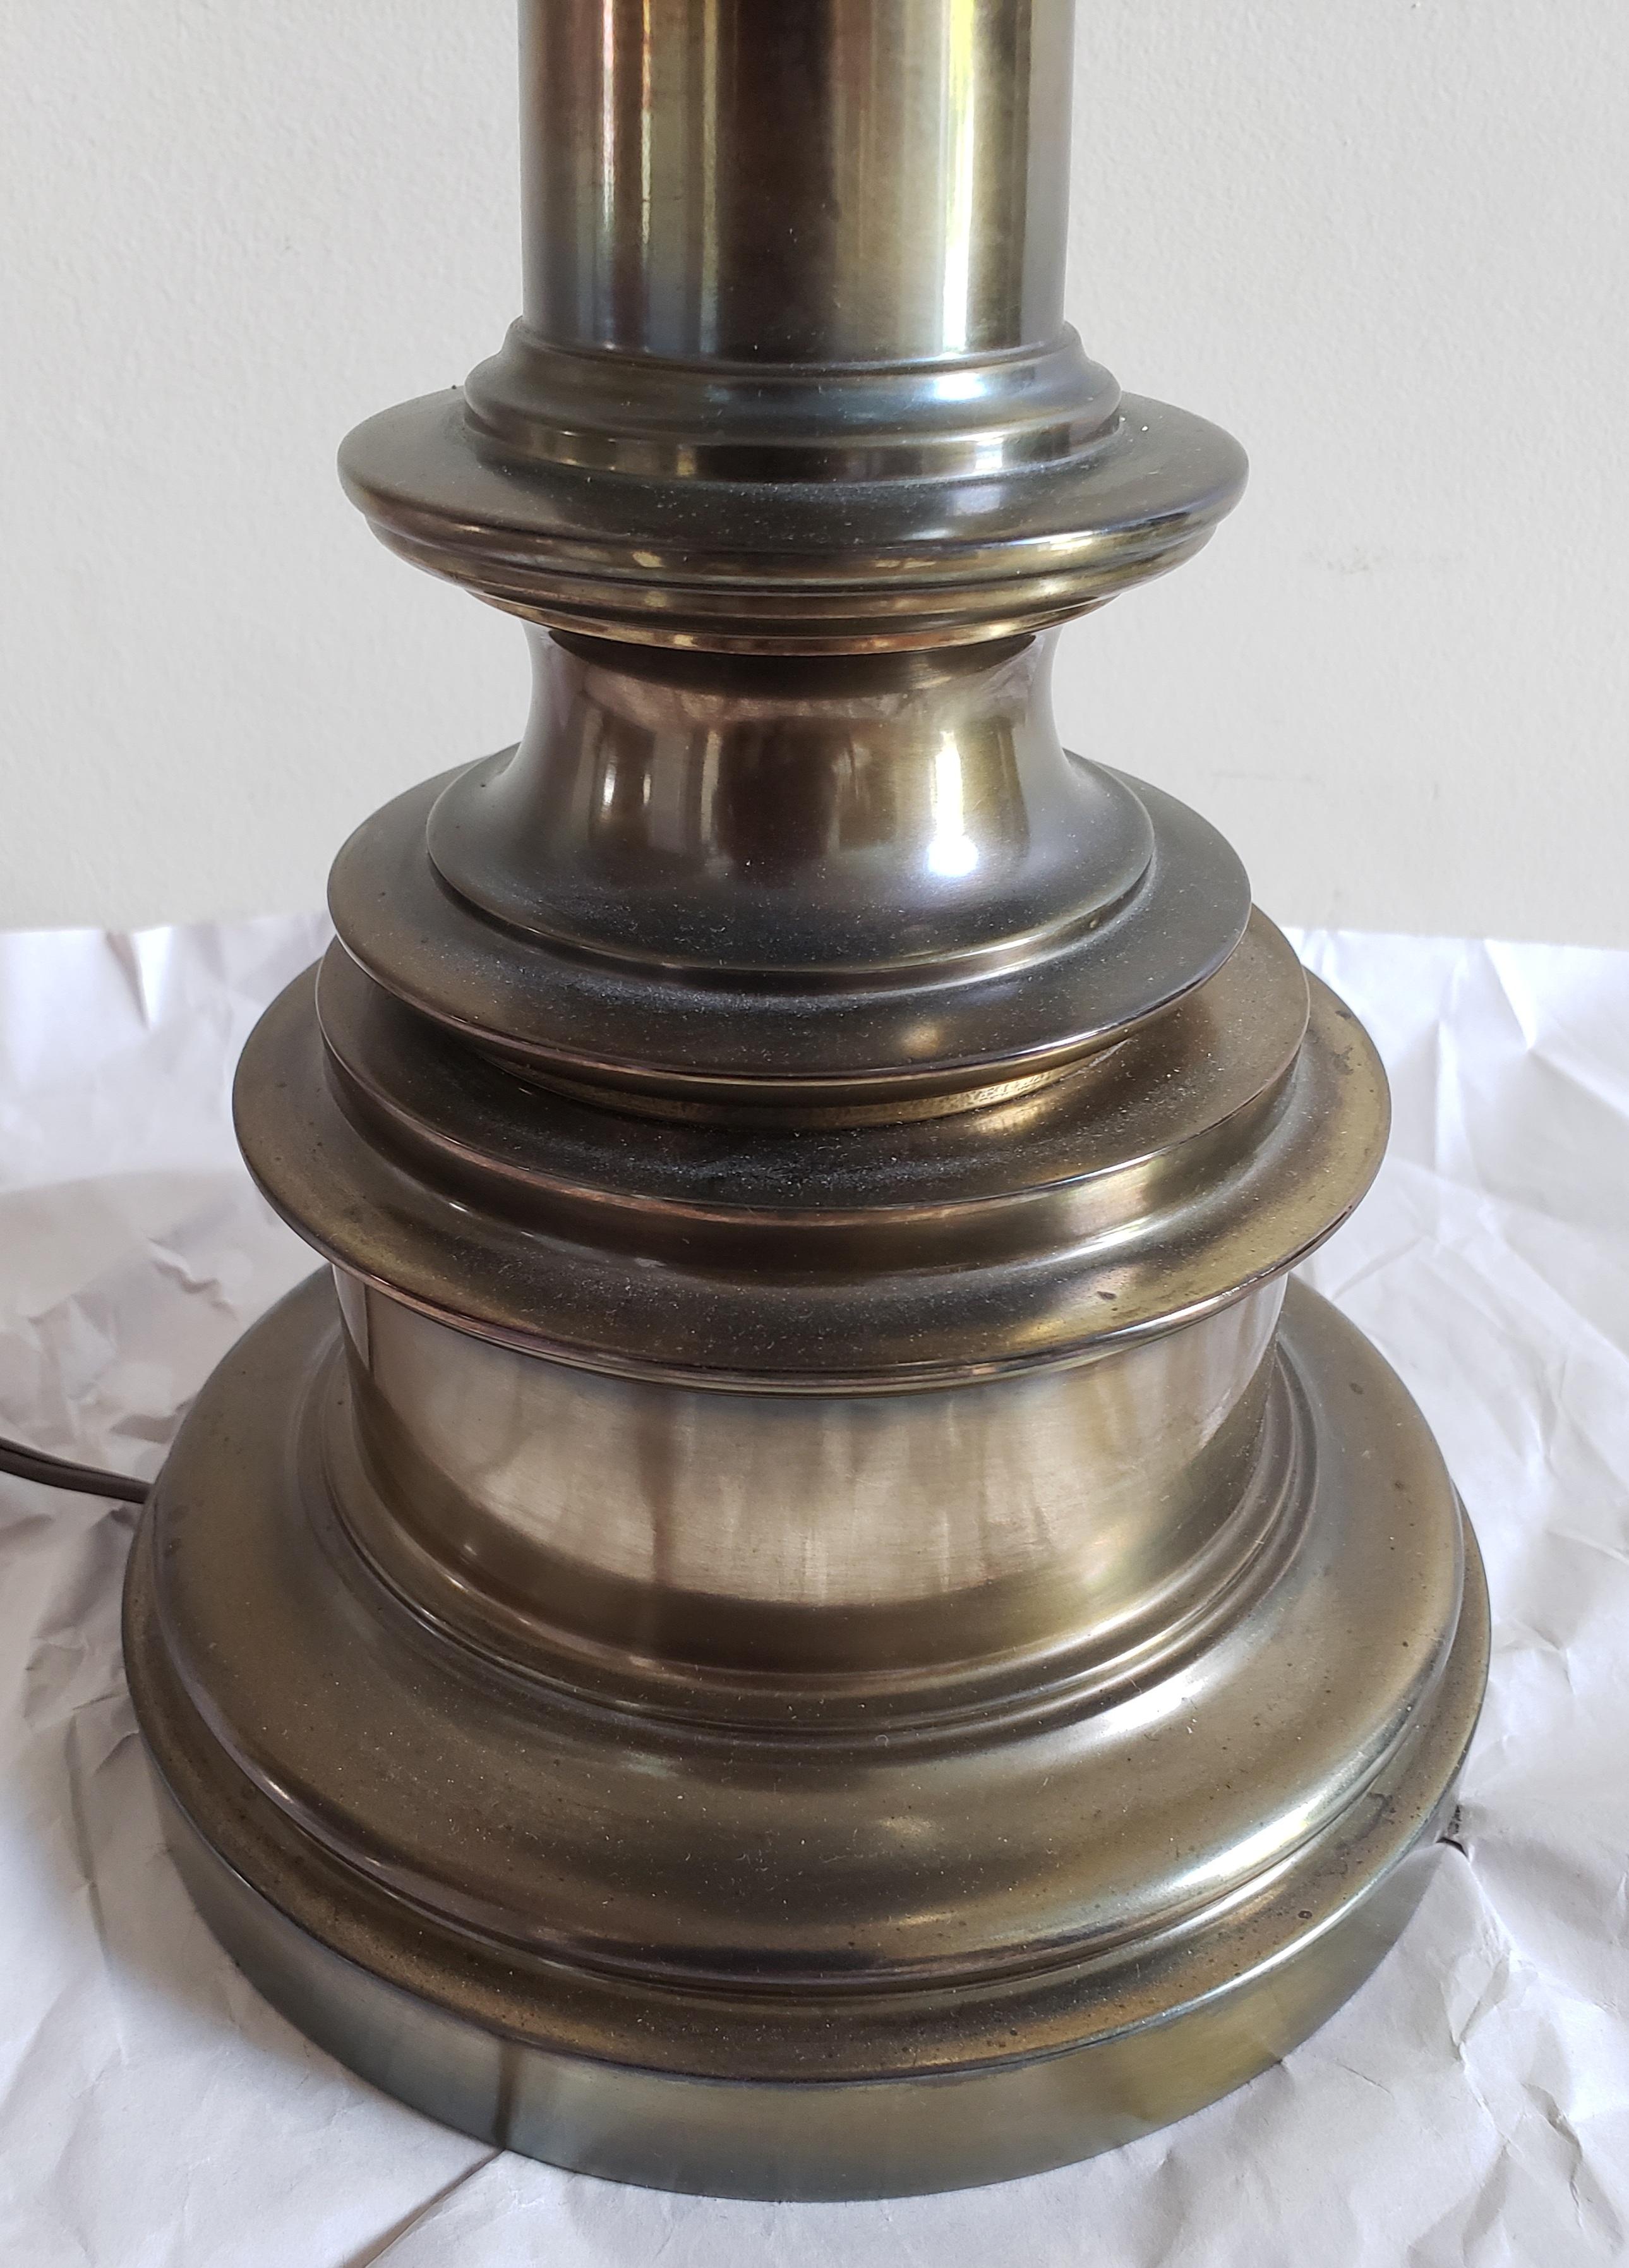 Vintage French Porcelain and Brass Jar Floral Table Lamp in sehr gutem Vintage-Zustand.
Messen Sie 7